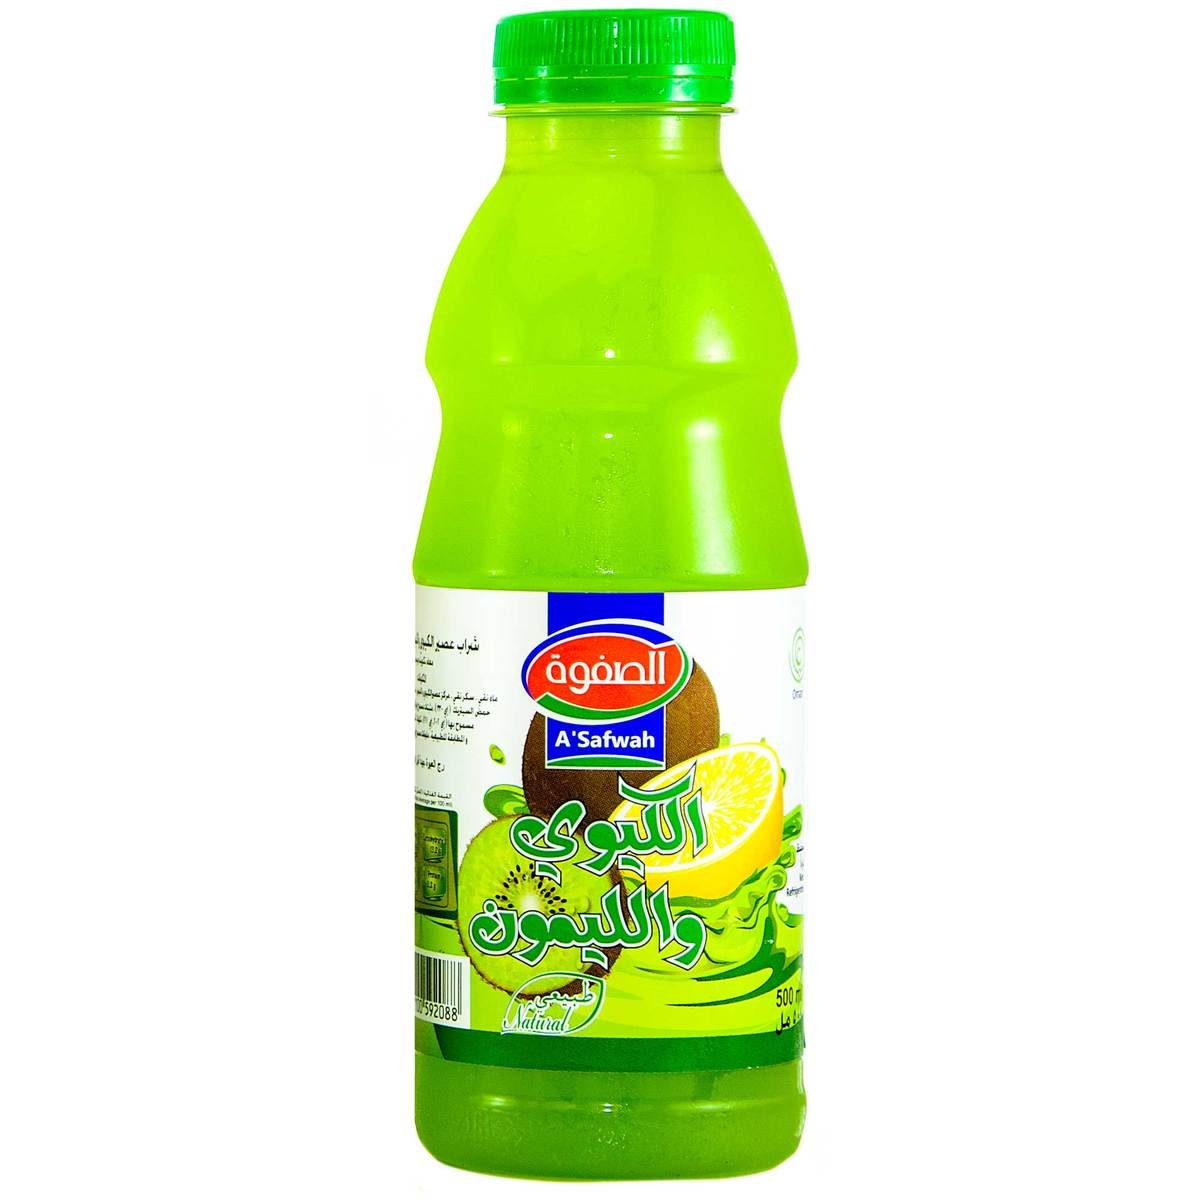 A'Safwah Kiwi Lemon Juice 500ml